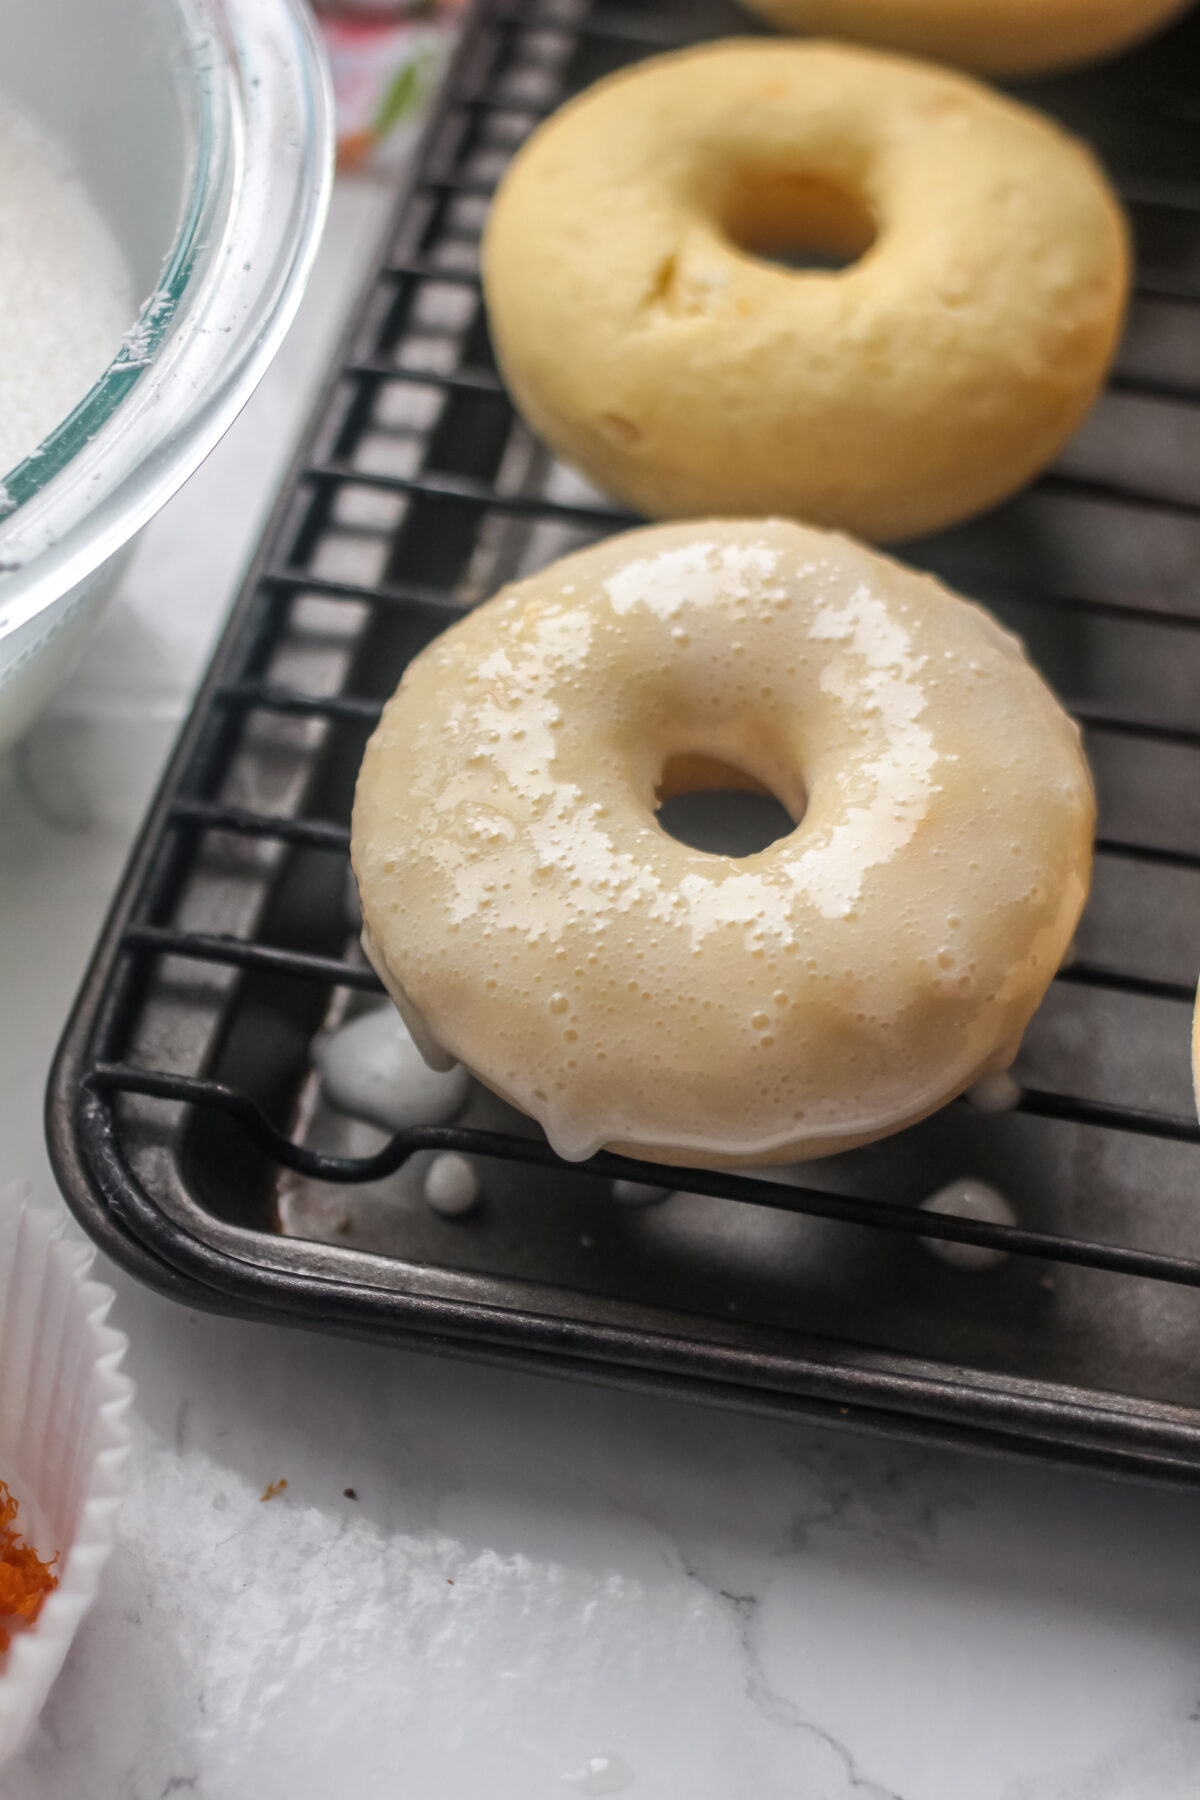 Glazed donut on cooling rack, with glaze not set.